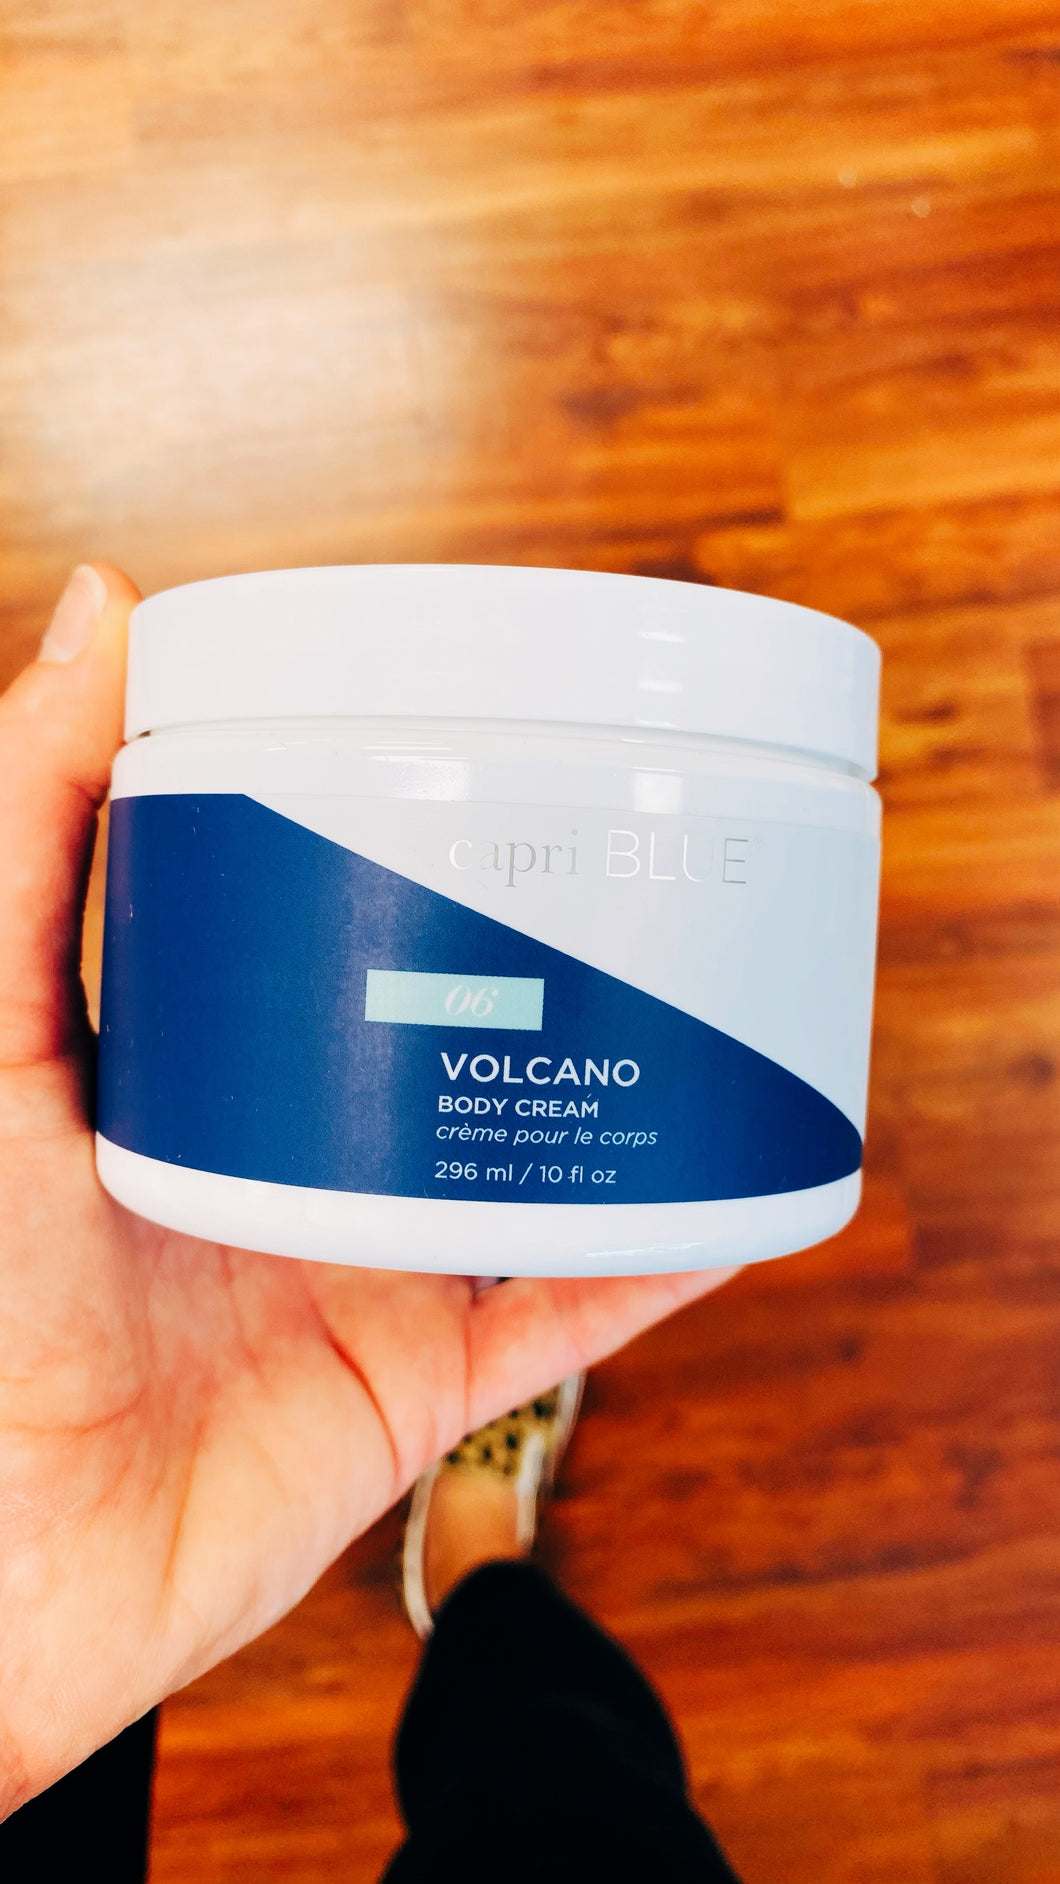 Capri Blue Volcano Body Cream